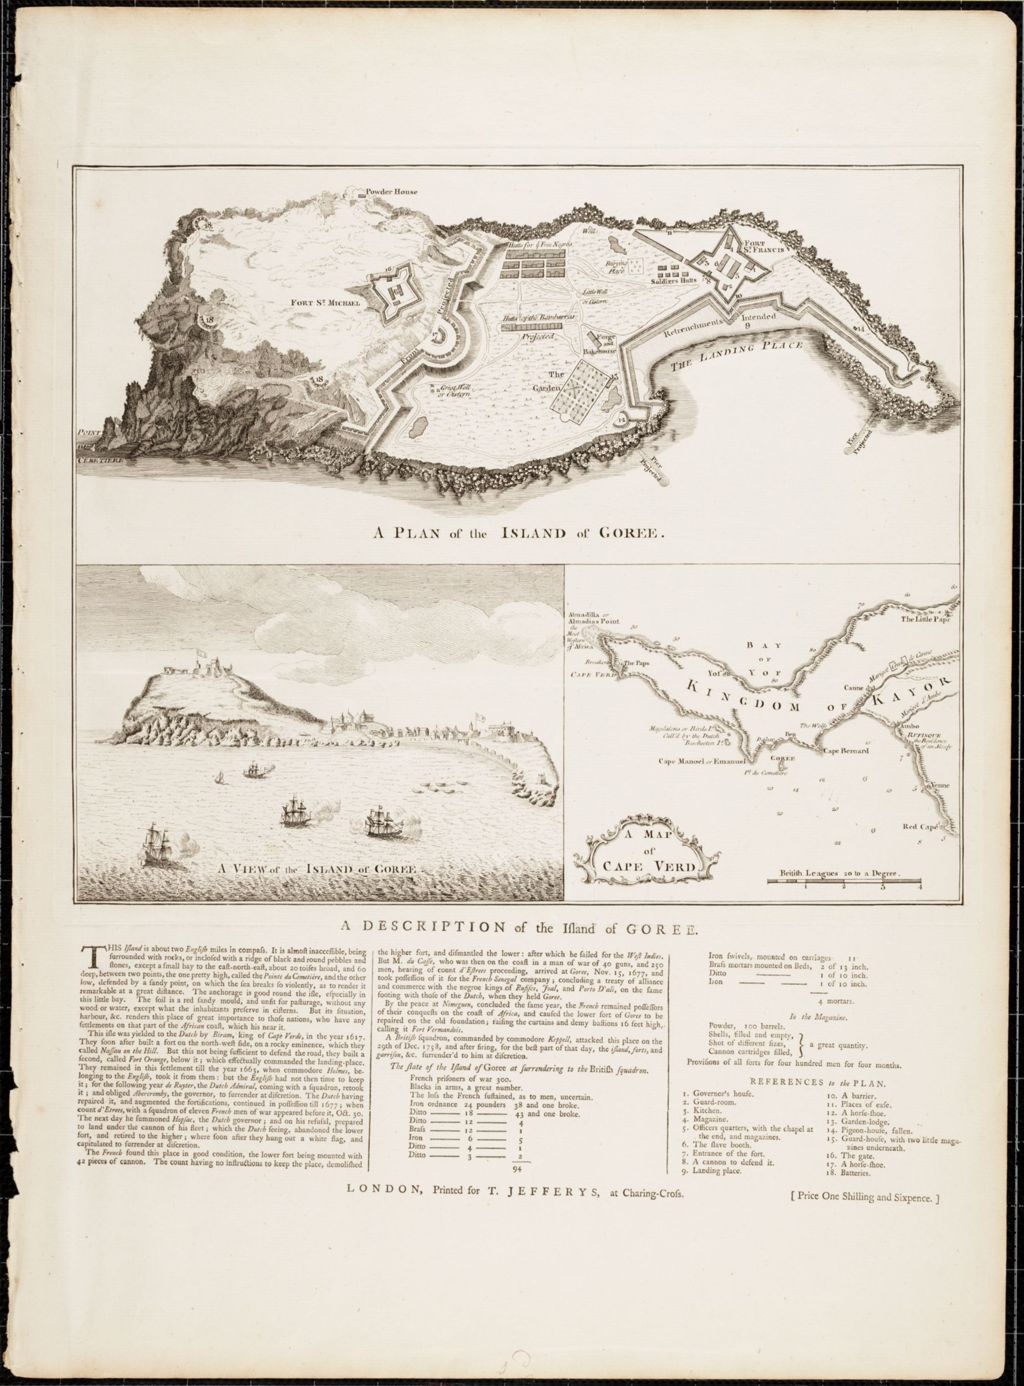 Miniature of Island of Goree / T. Jefferys [approximately between 1700-1799]